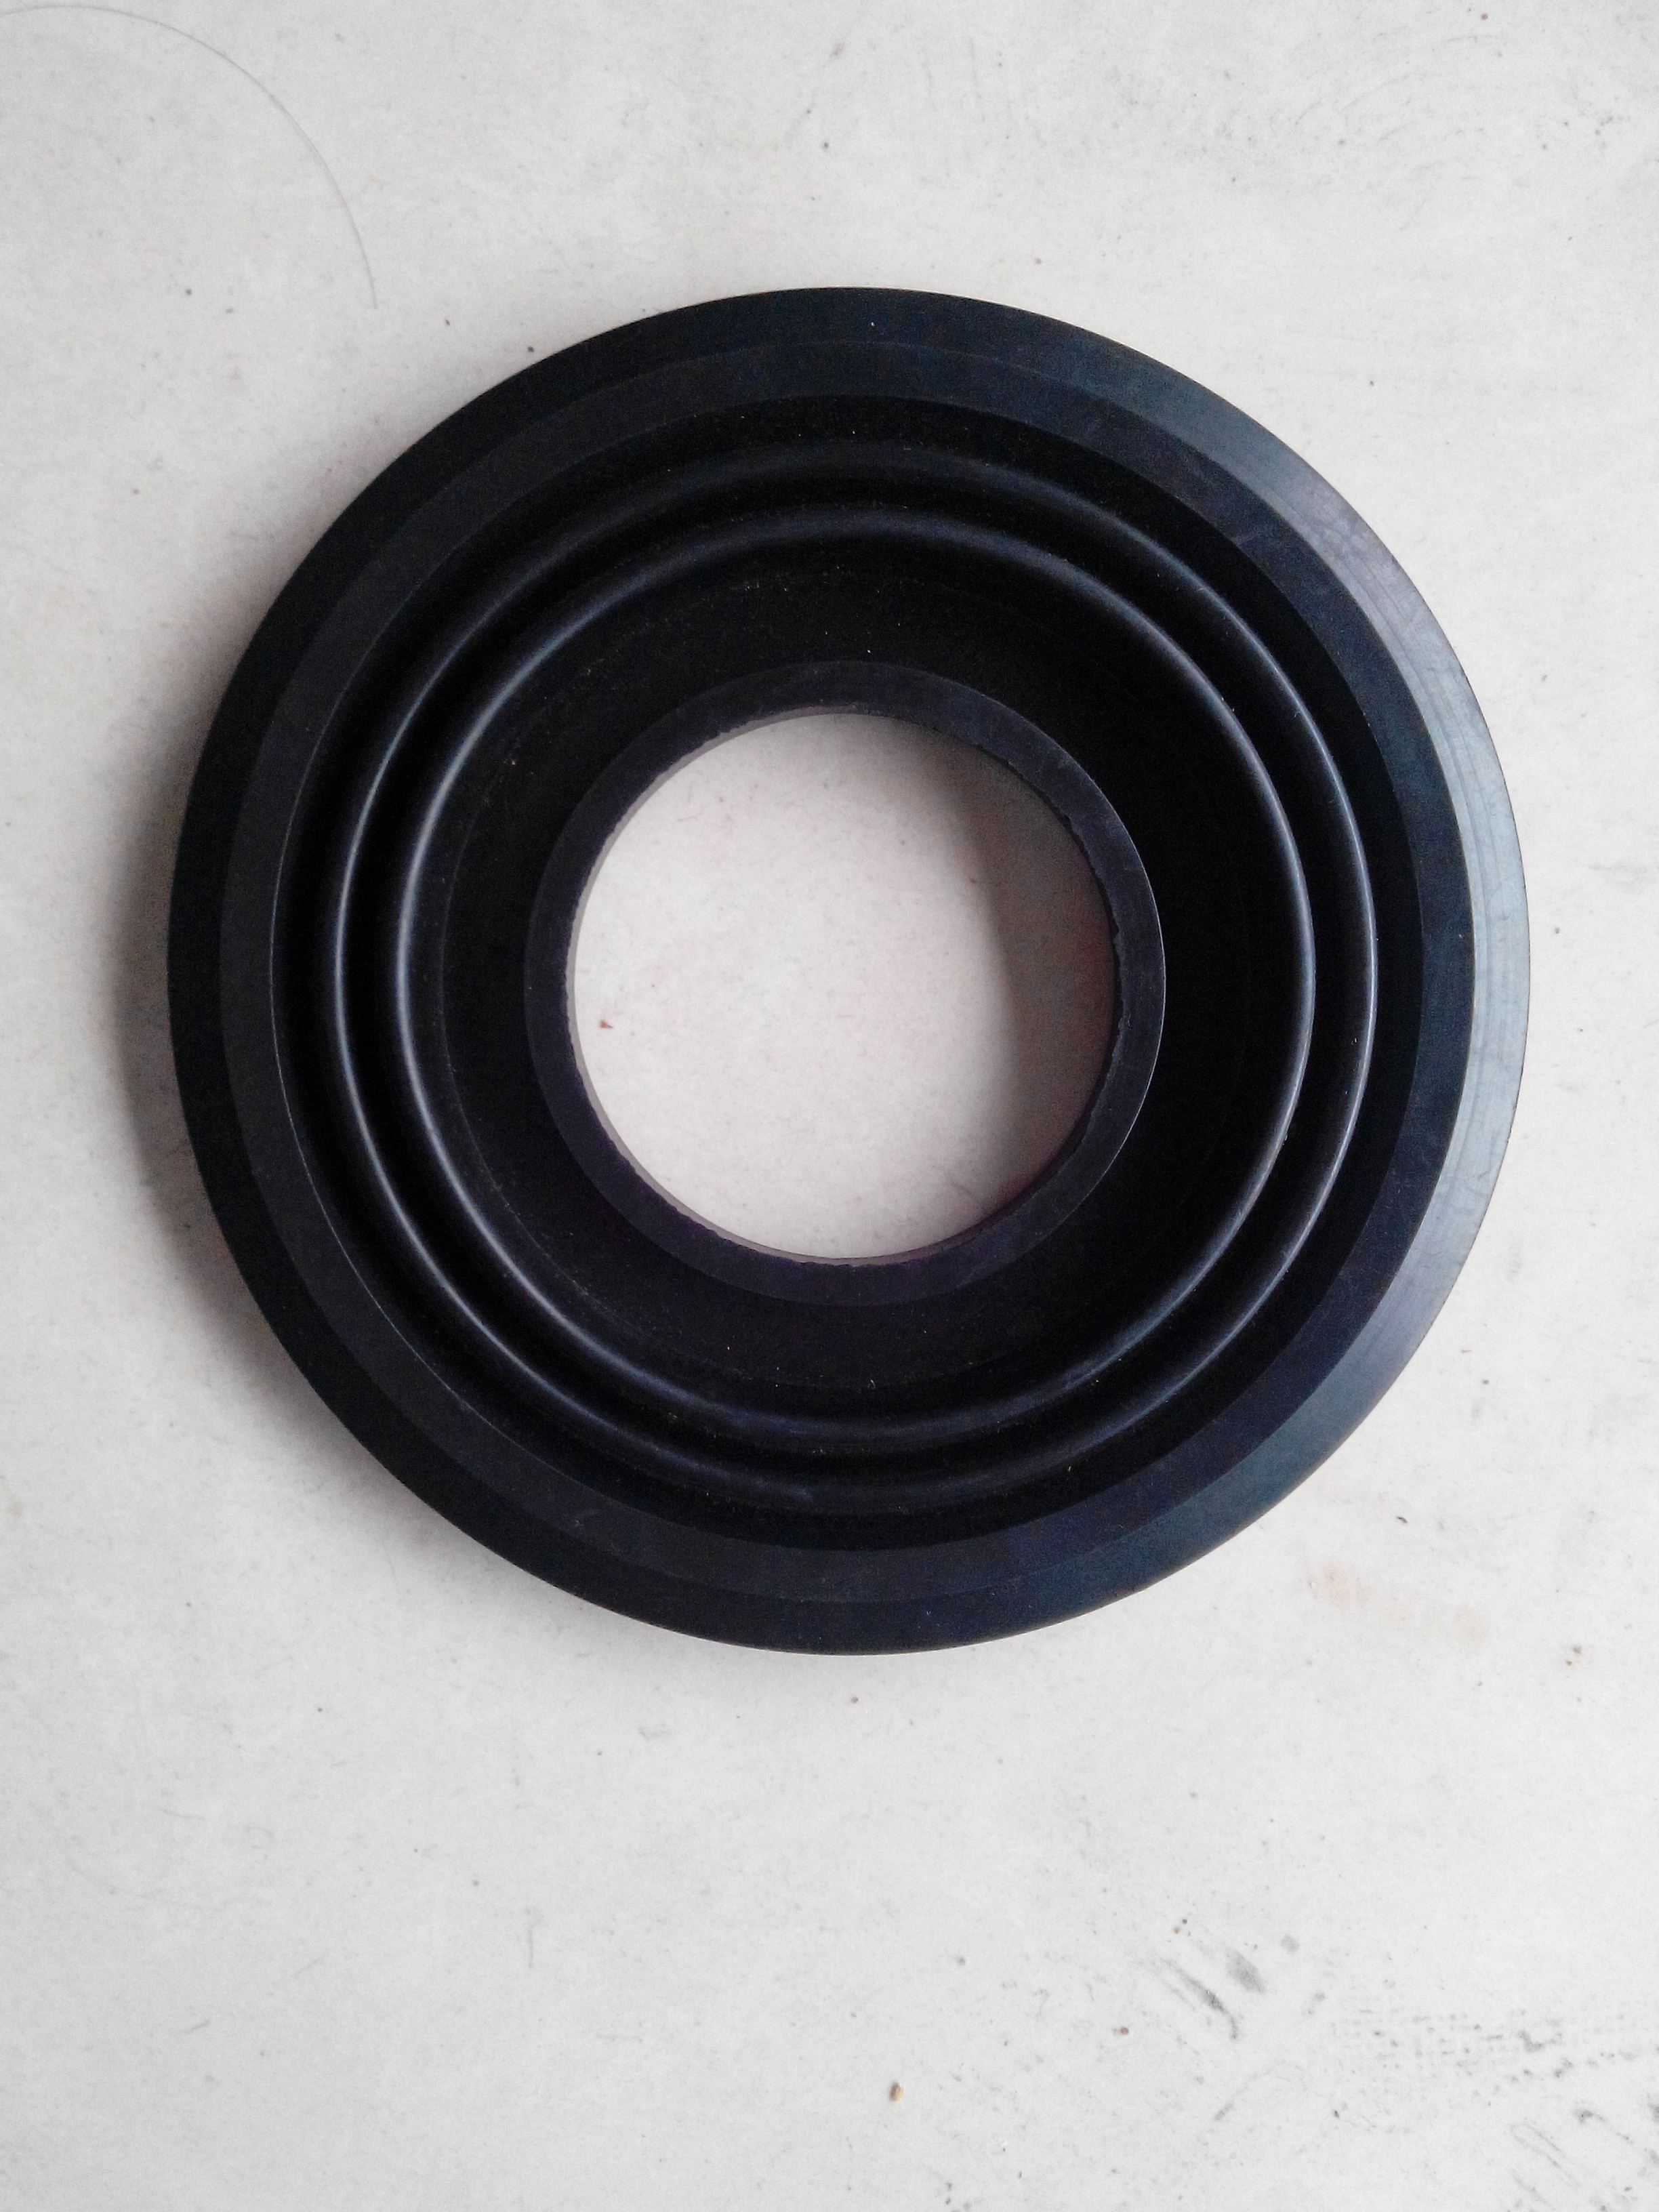 Bevelloni beveler waterproof rubber